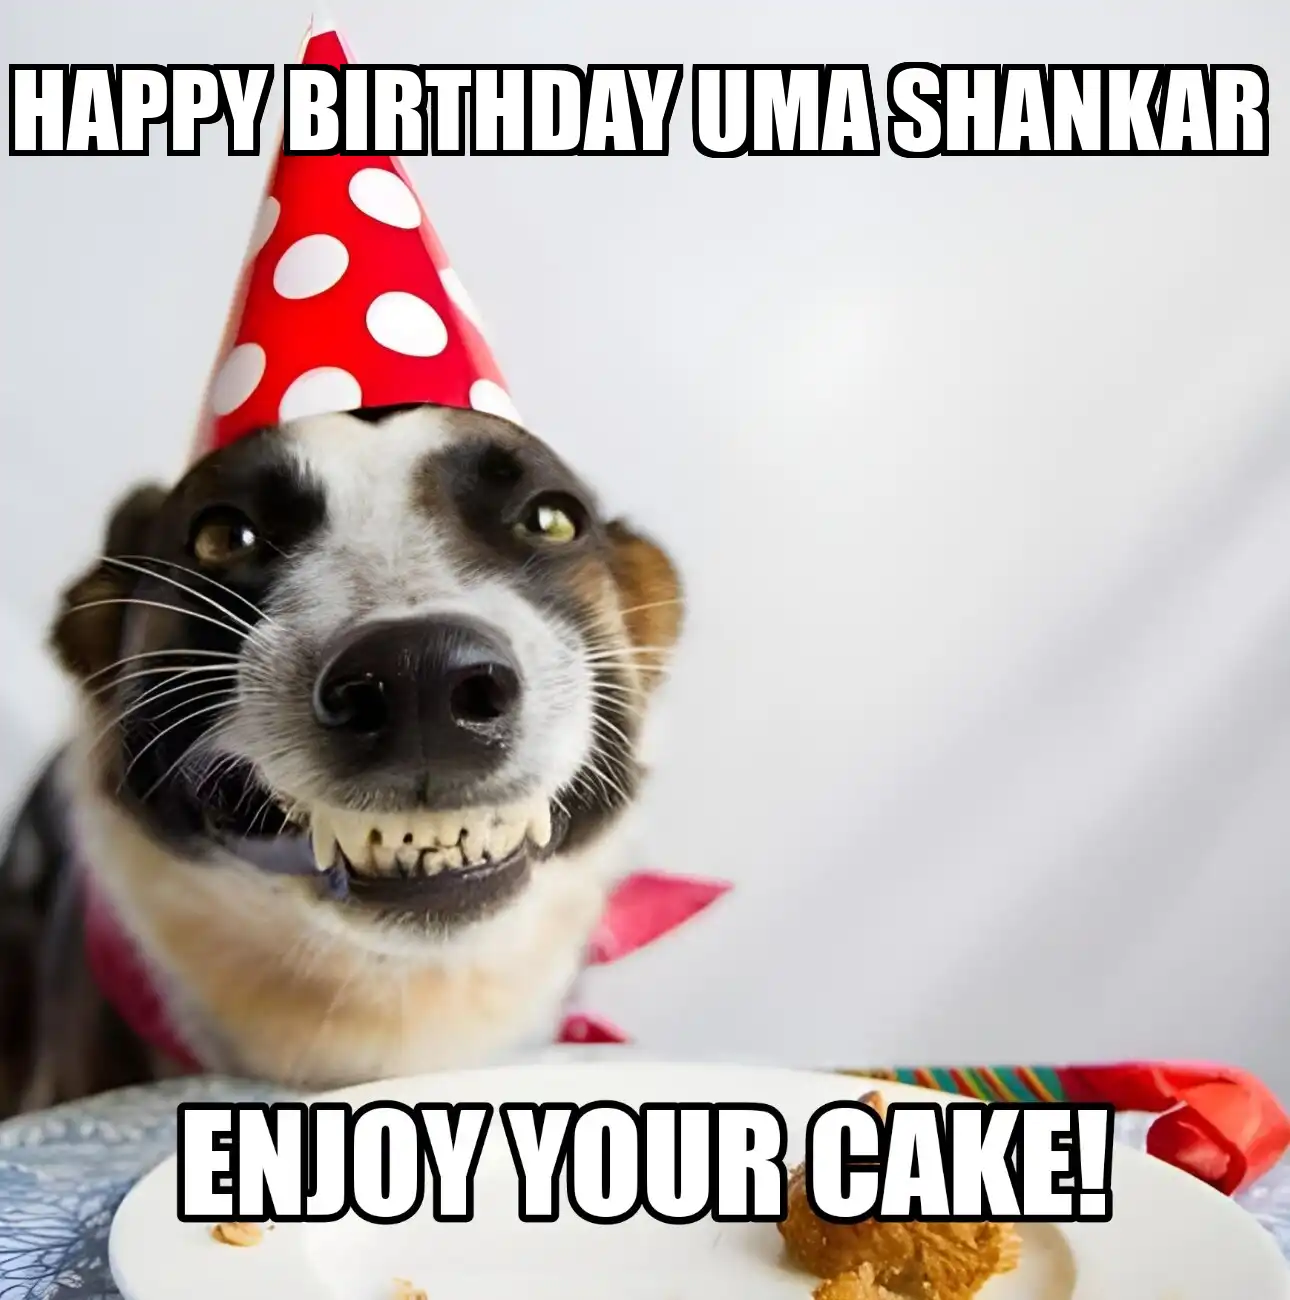 Happy Birthday Uma shankar Enjoy Your Cake Dog Meme